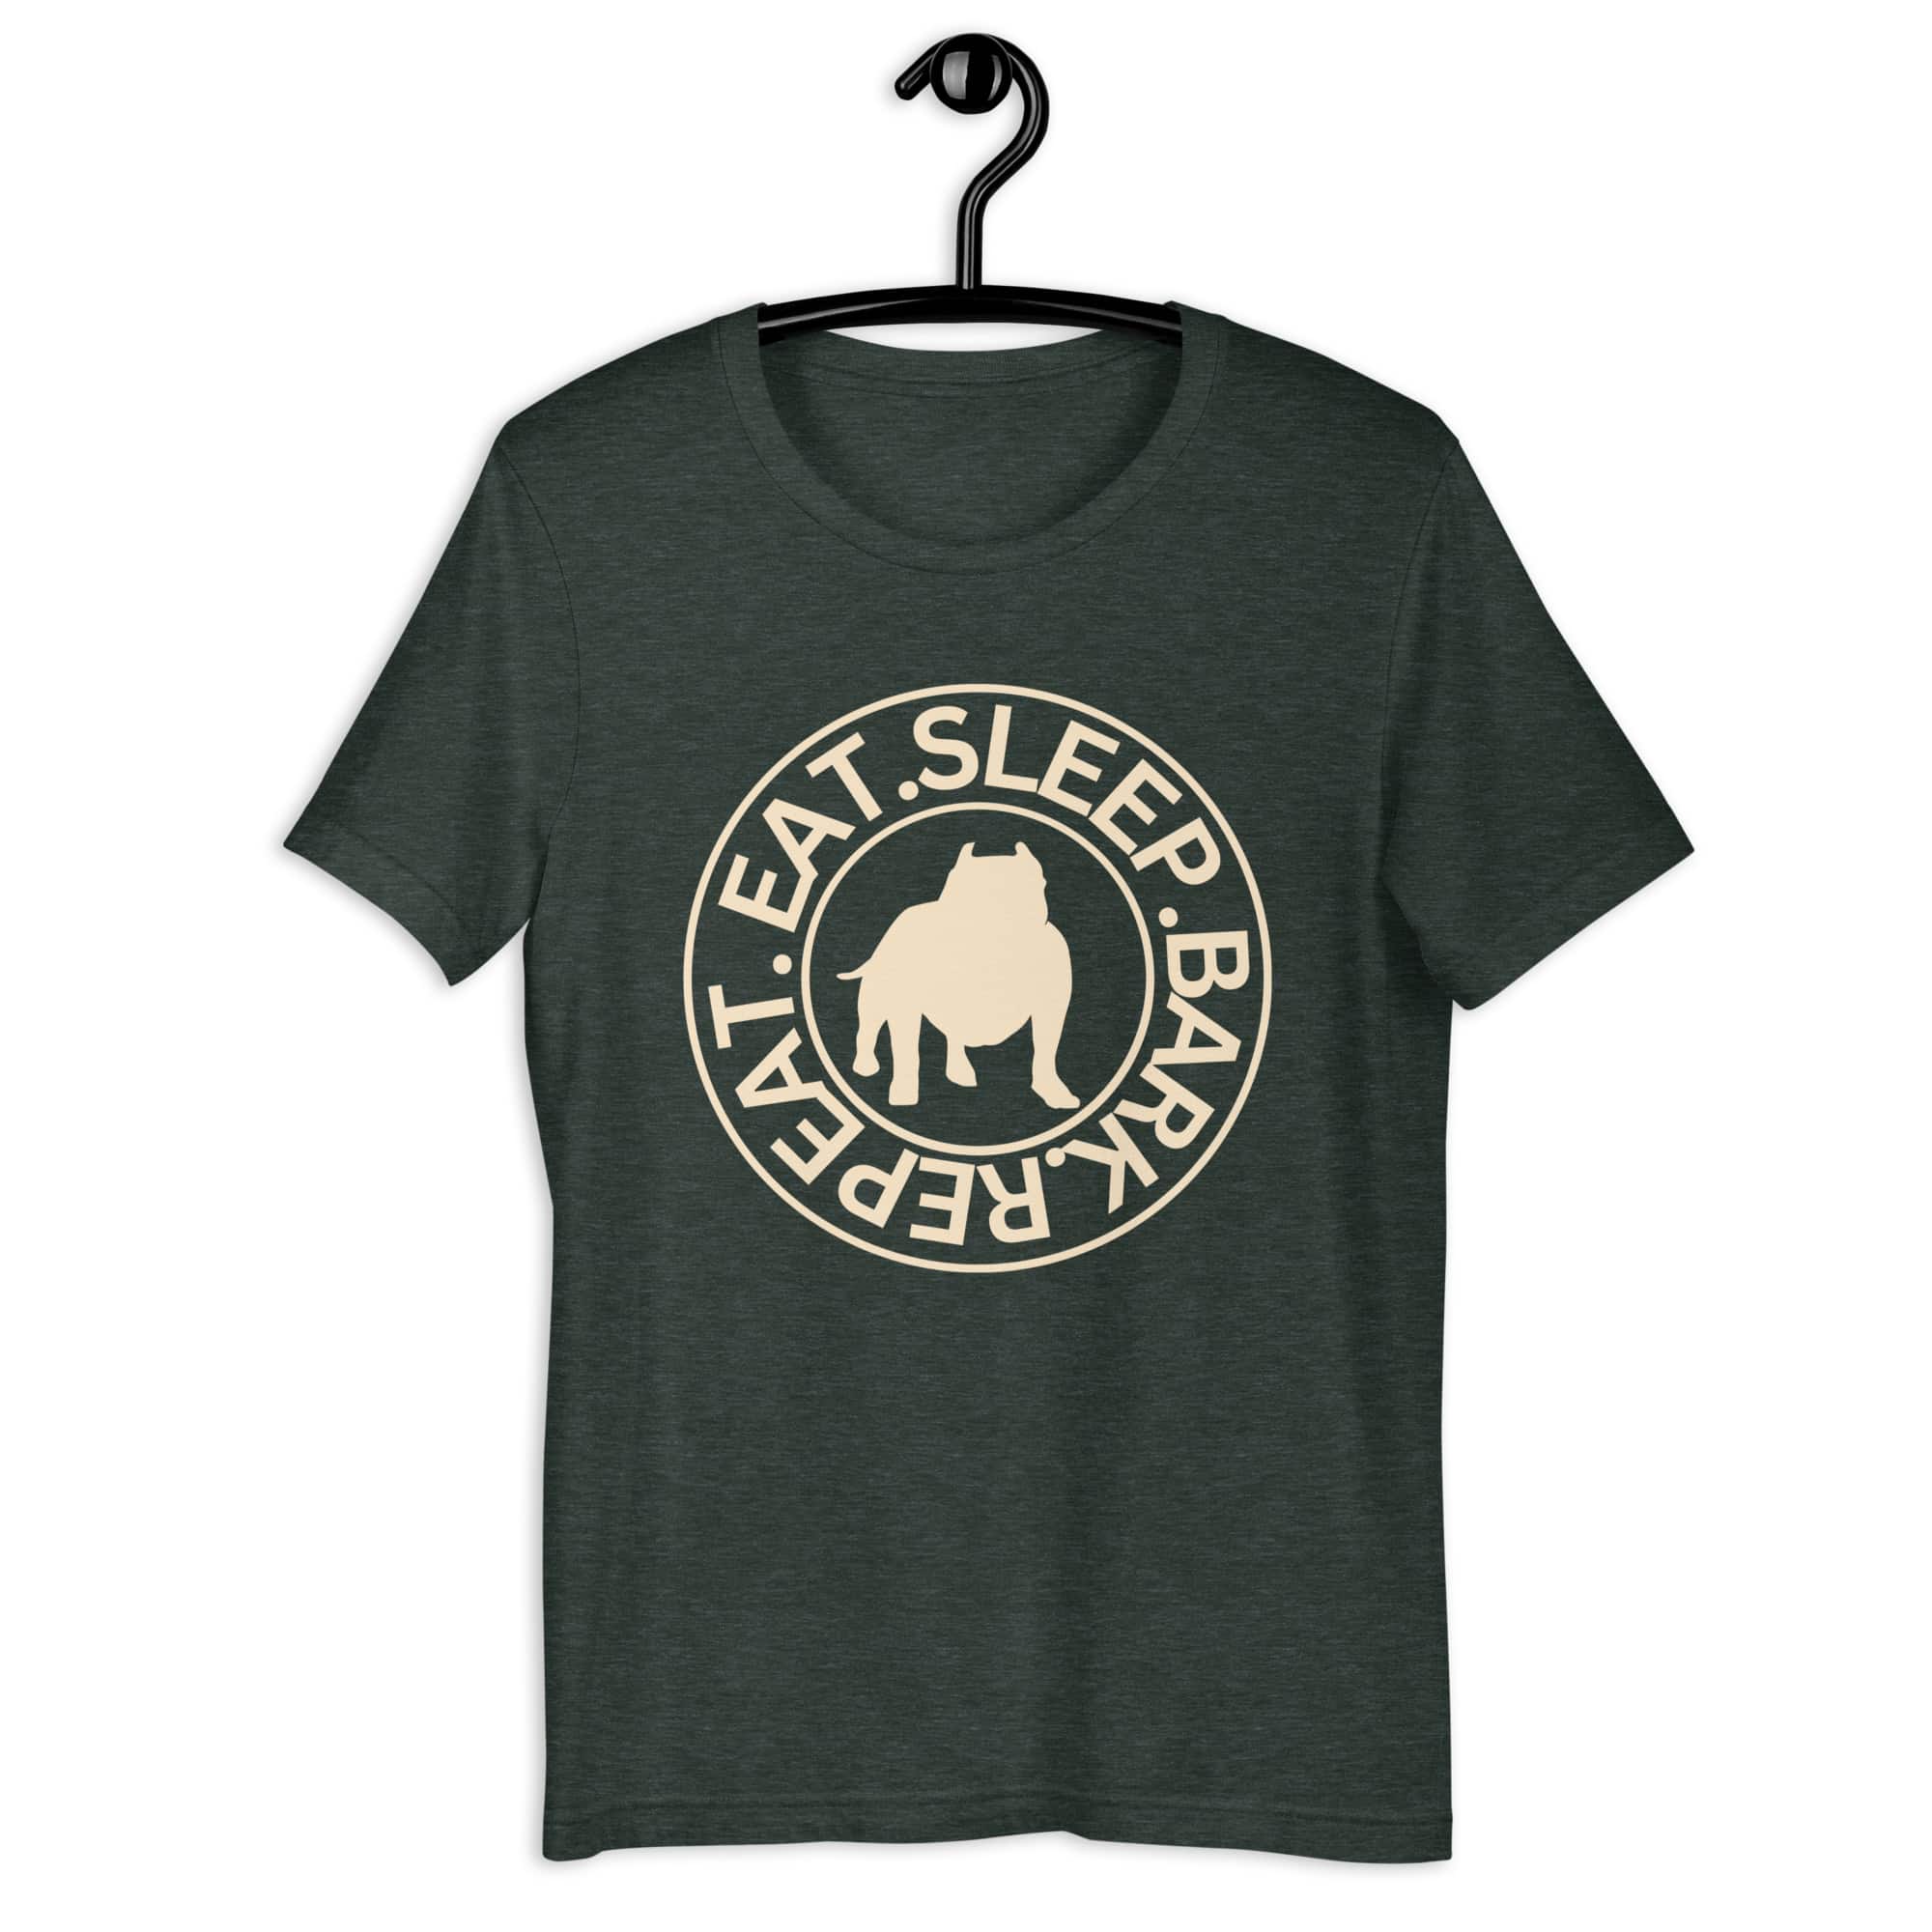 Eat Sleep Bark Repeat Bulldog Unisex T-Shirt. Heather Forest